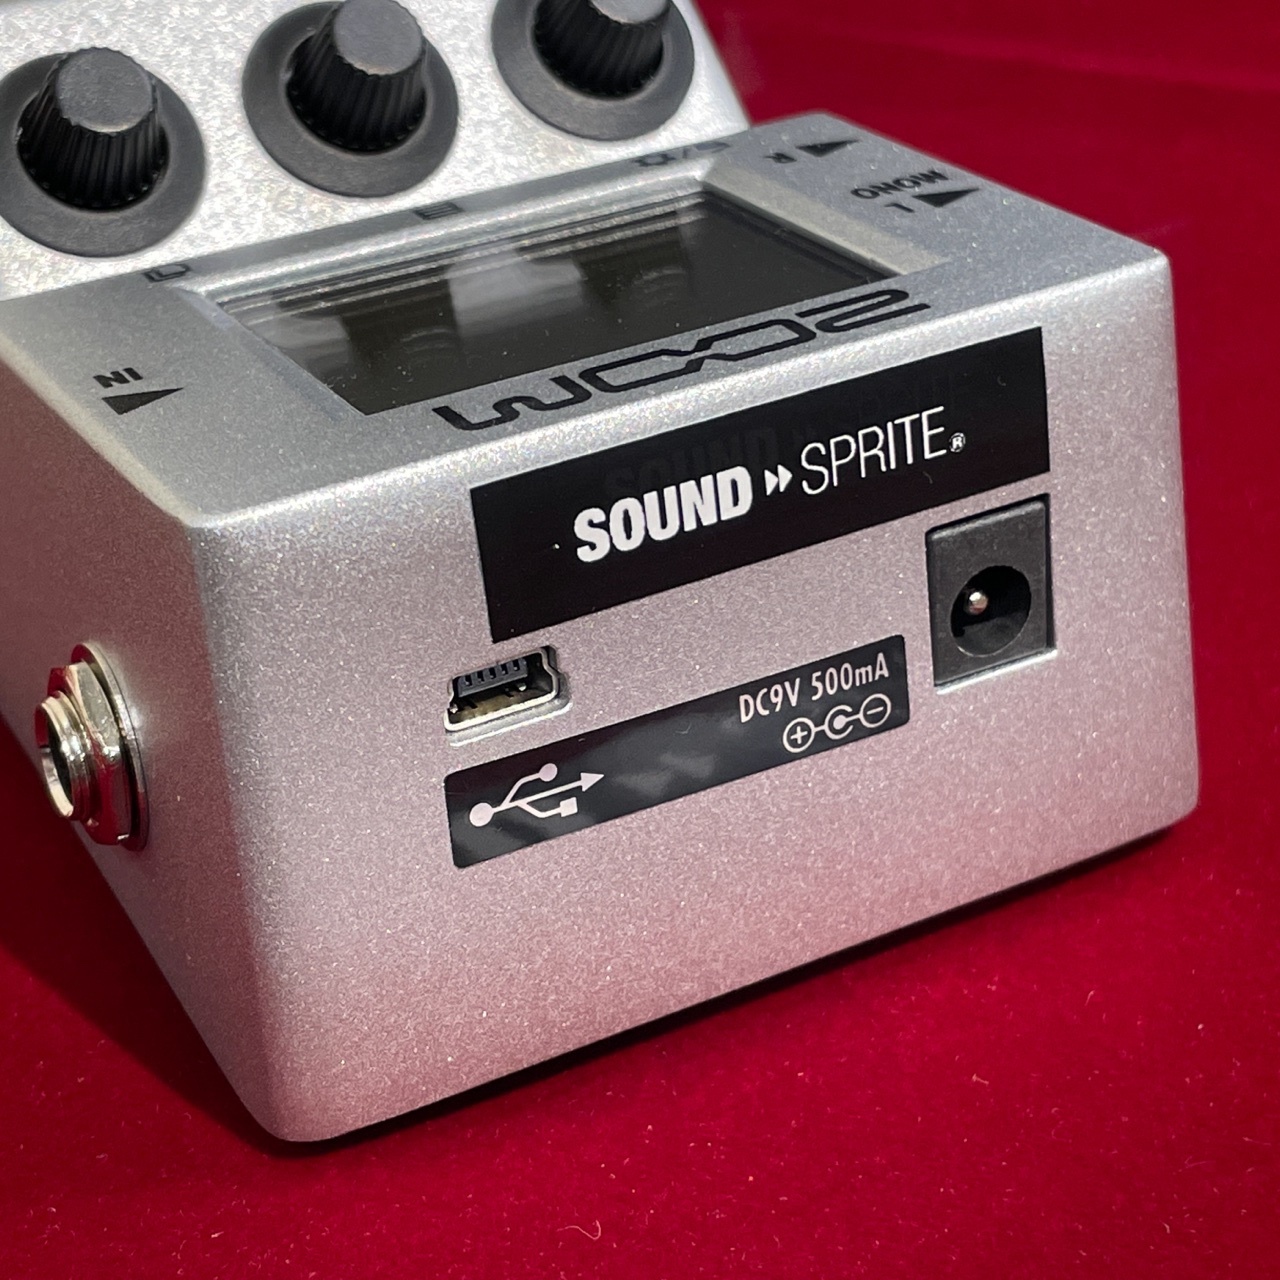 SOUND SPRITE ZOOM MS-50G Mod 【数量限定で同加工パッチケーブルを